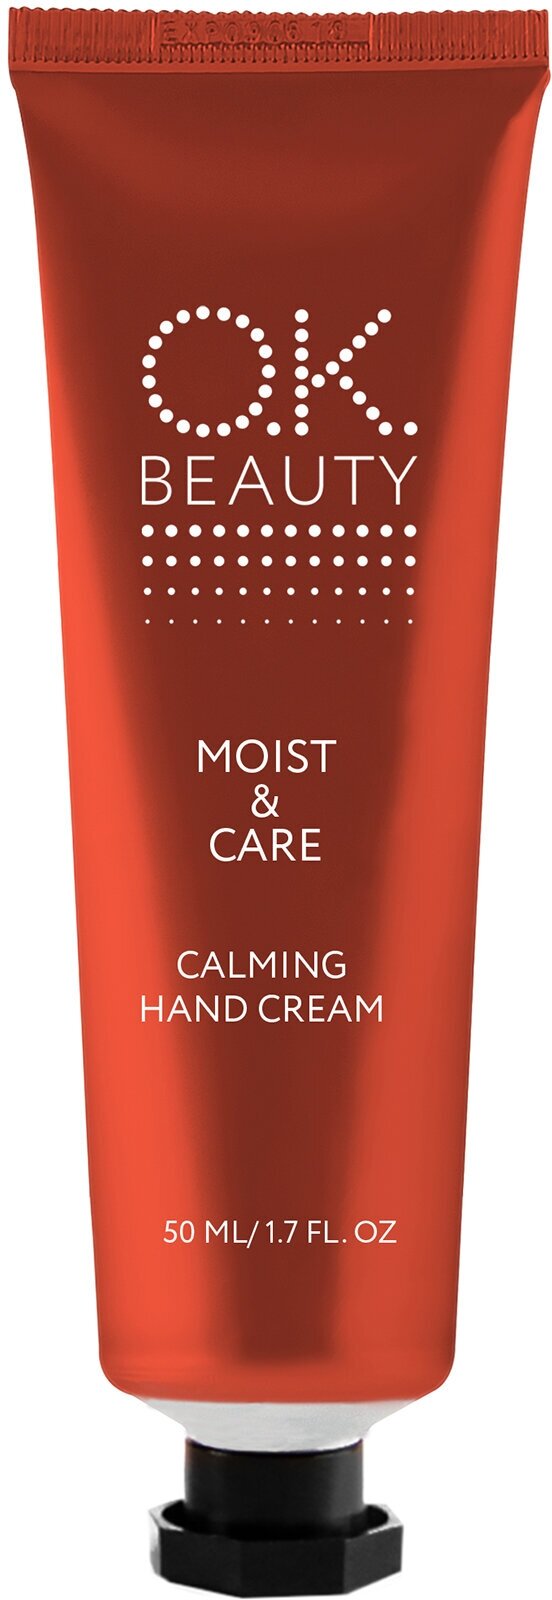 O.K.BEAUTY Крем для рук Moist & Care Calming Hand Cream смягчающий успокаивающий, 50 мл